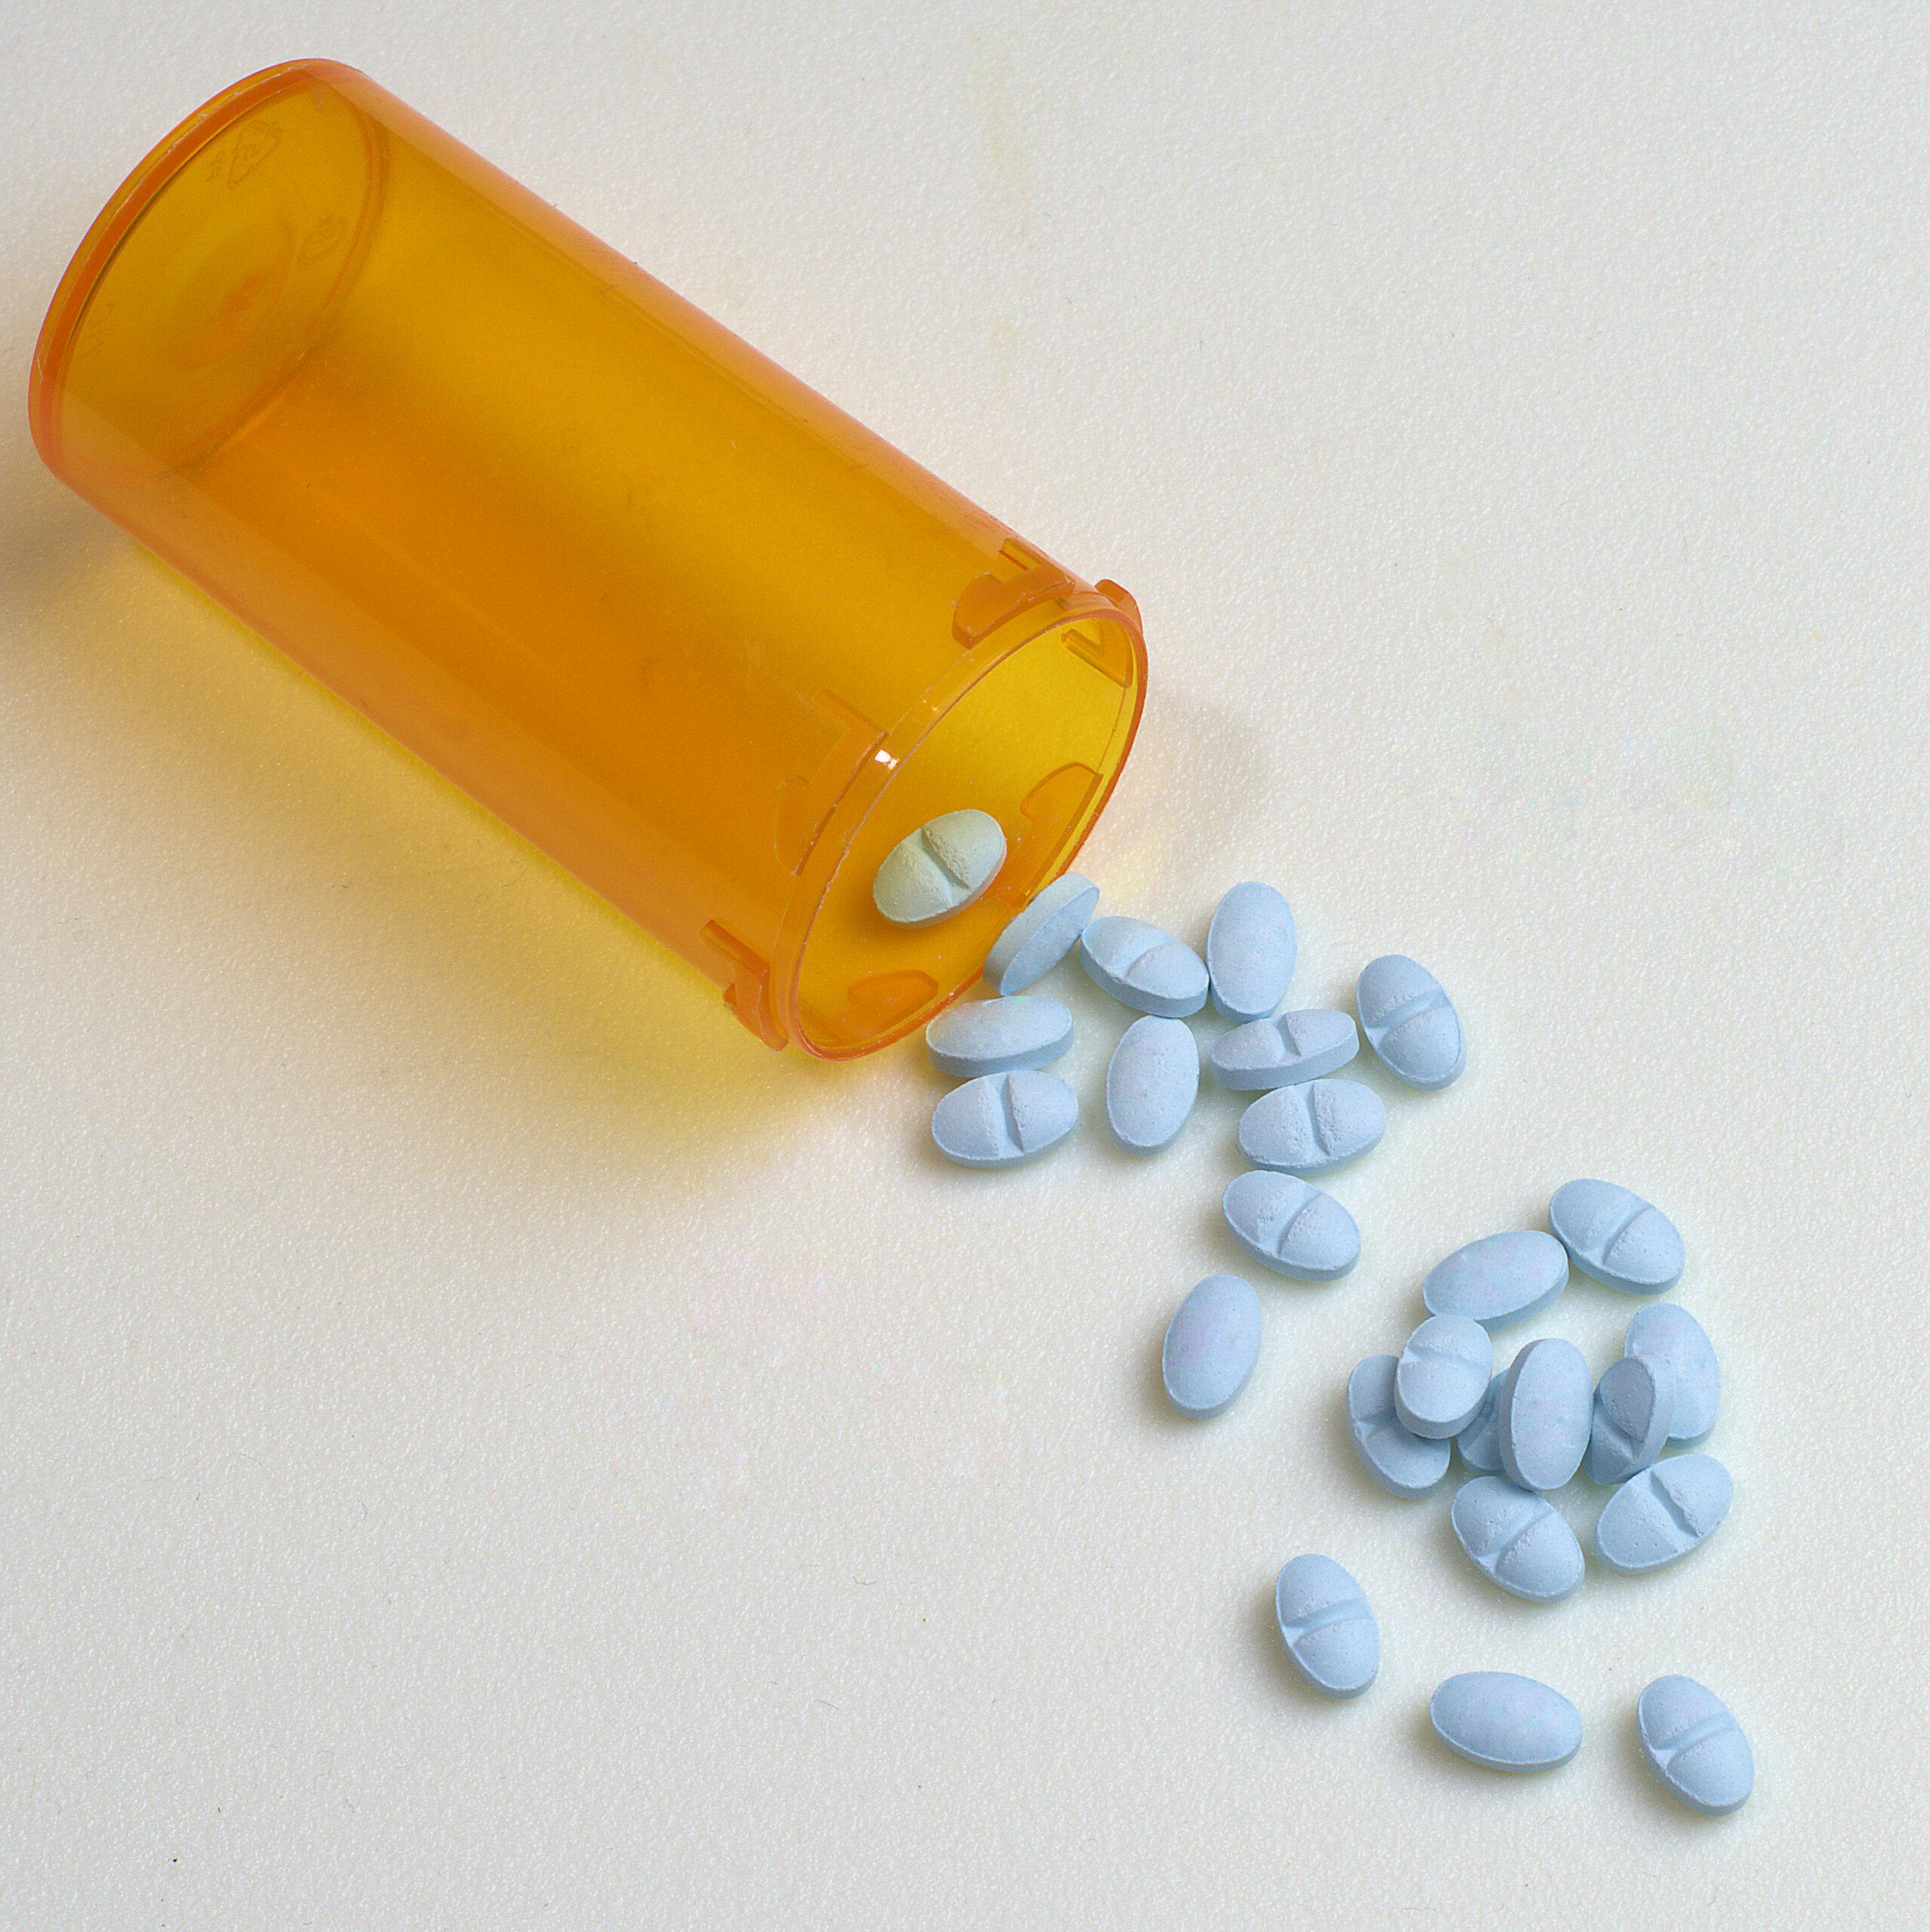 blue alprazolam pills spilling out of rx bottle